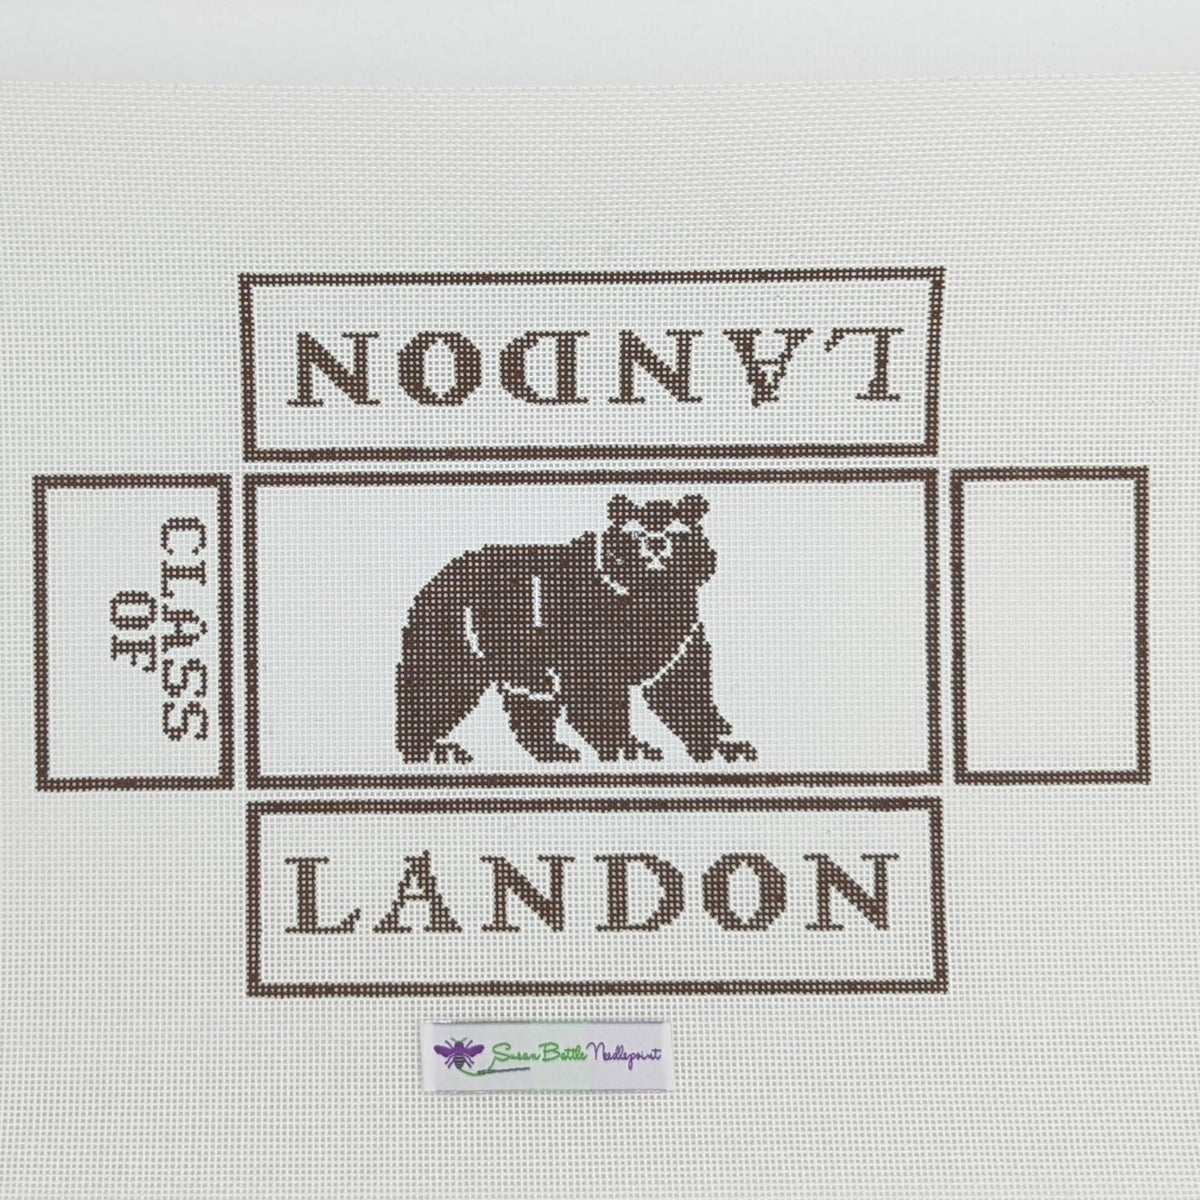 Landon School Bear Brick Cover